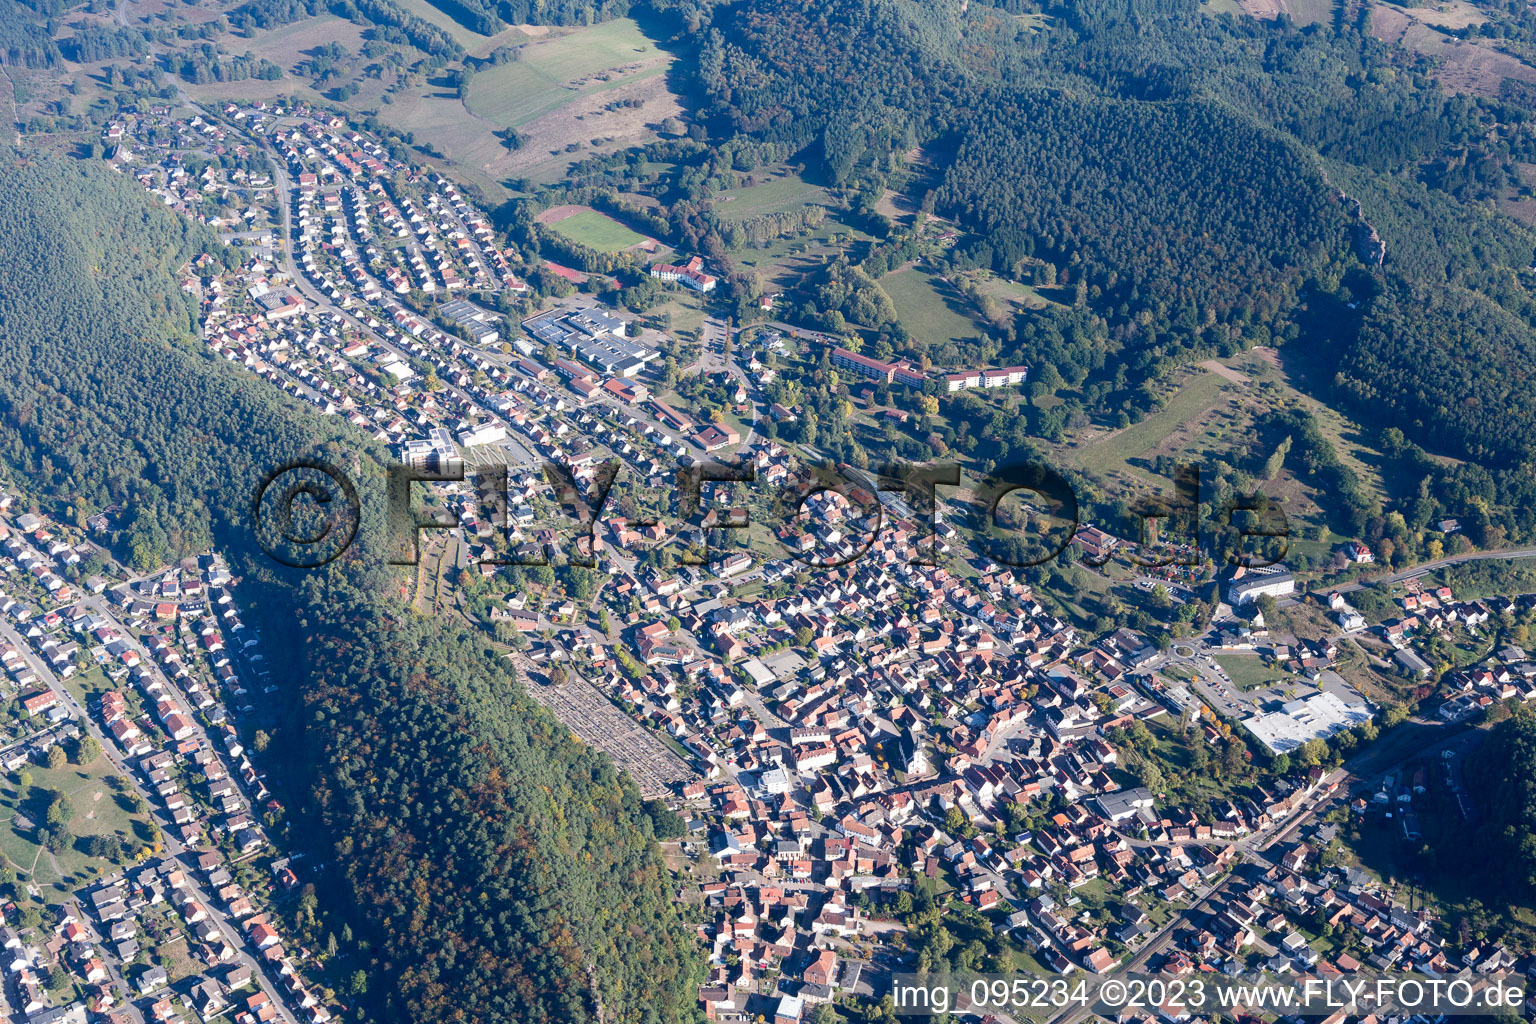 Bird's eye view of Dahn in the state Rhineland-Palatinate, Germany